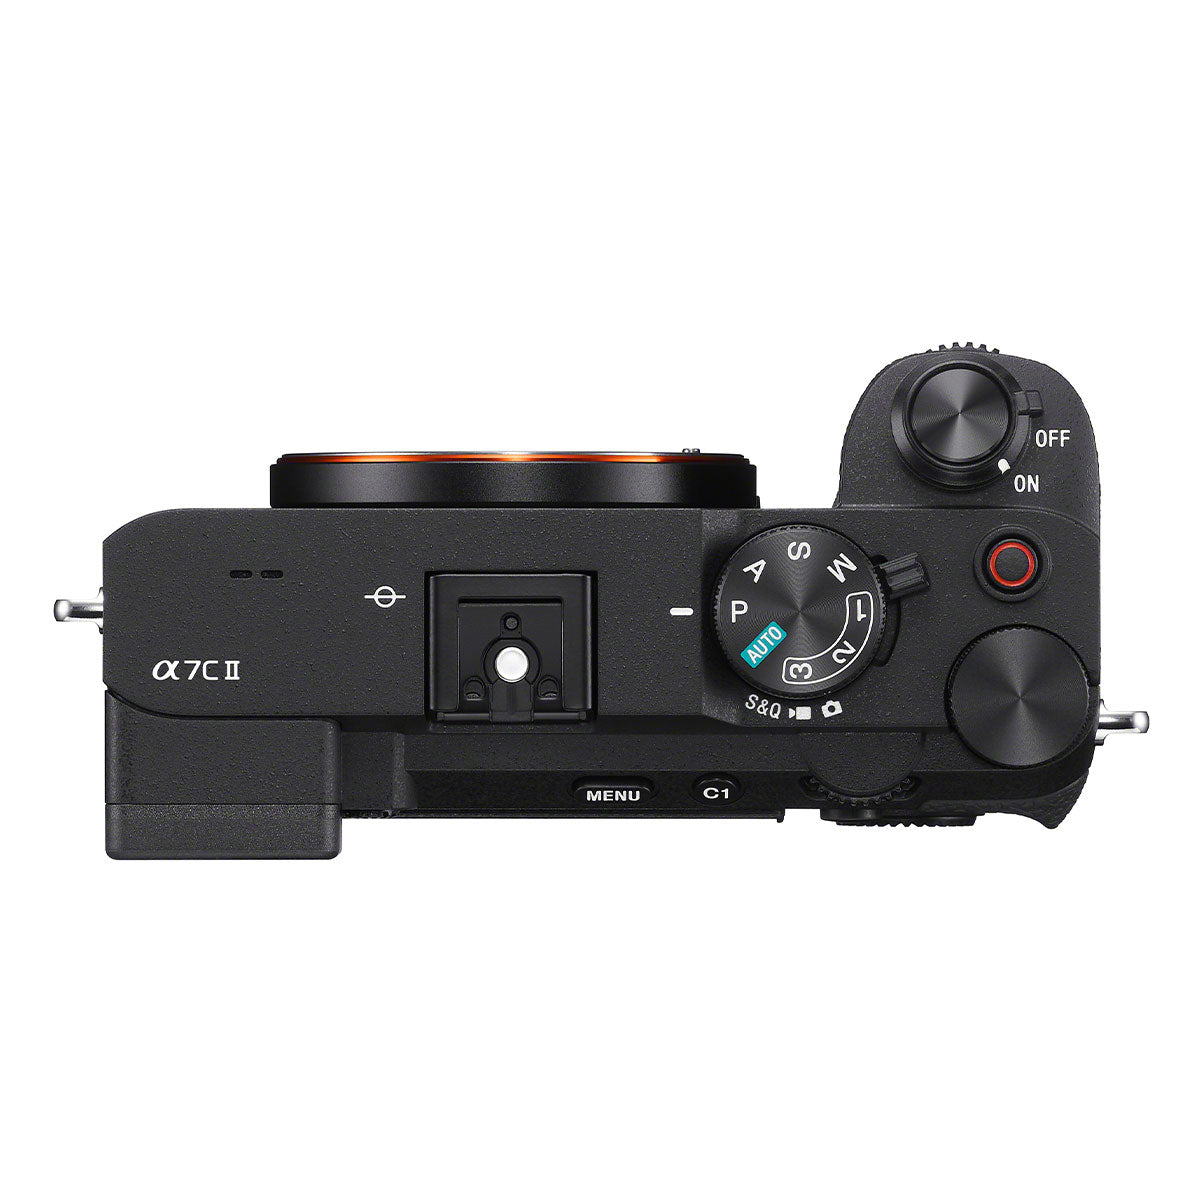 Sony a7C II Mirrorless Camera (Black) *OPEN BOX*